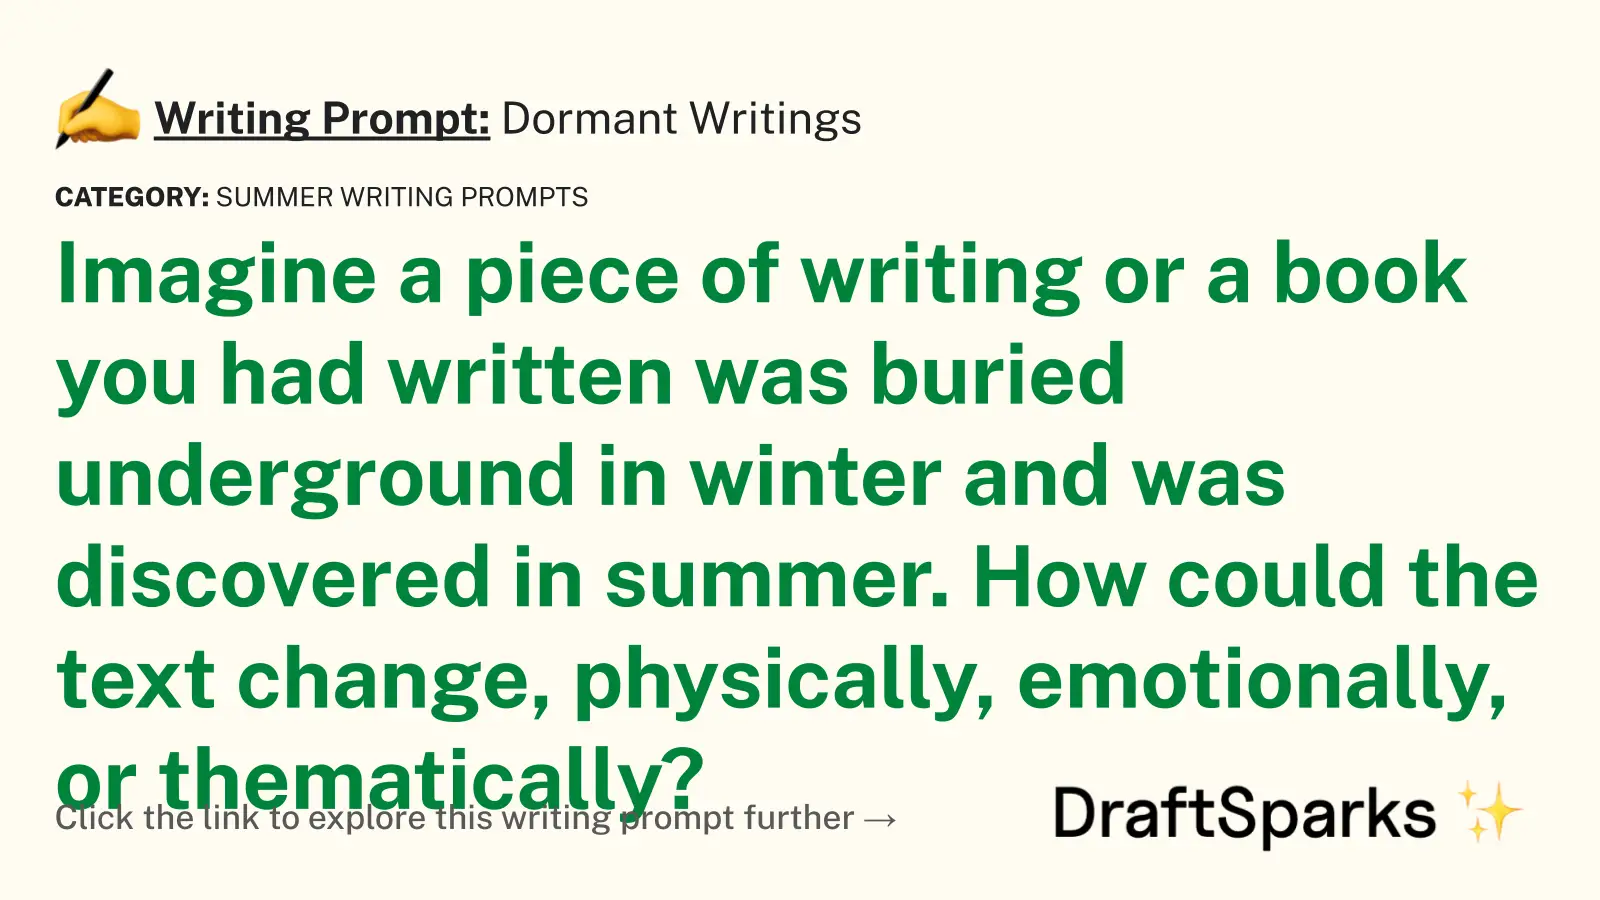 Dormant Writings